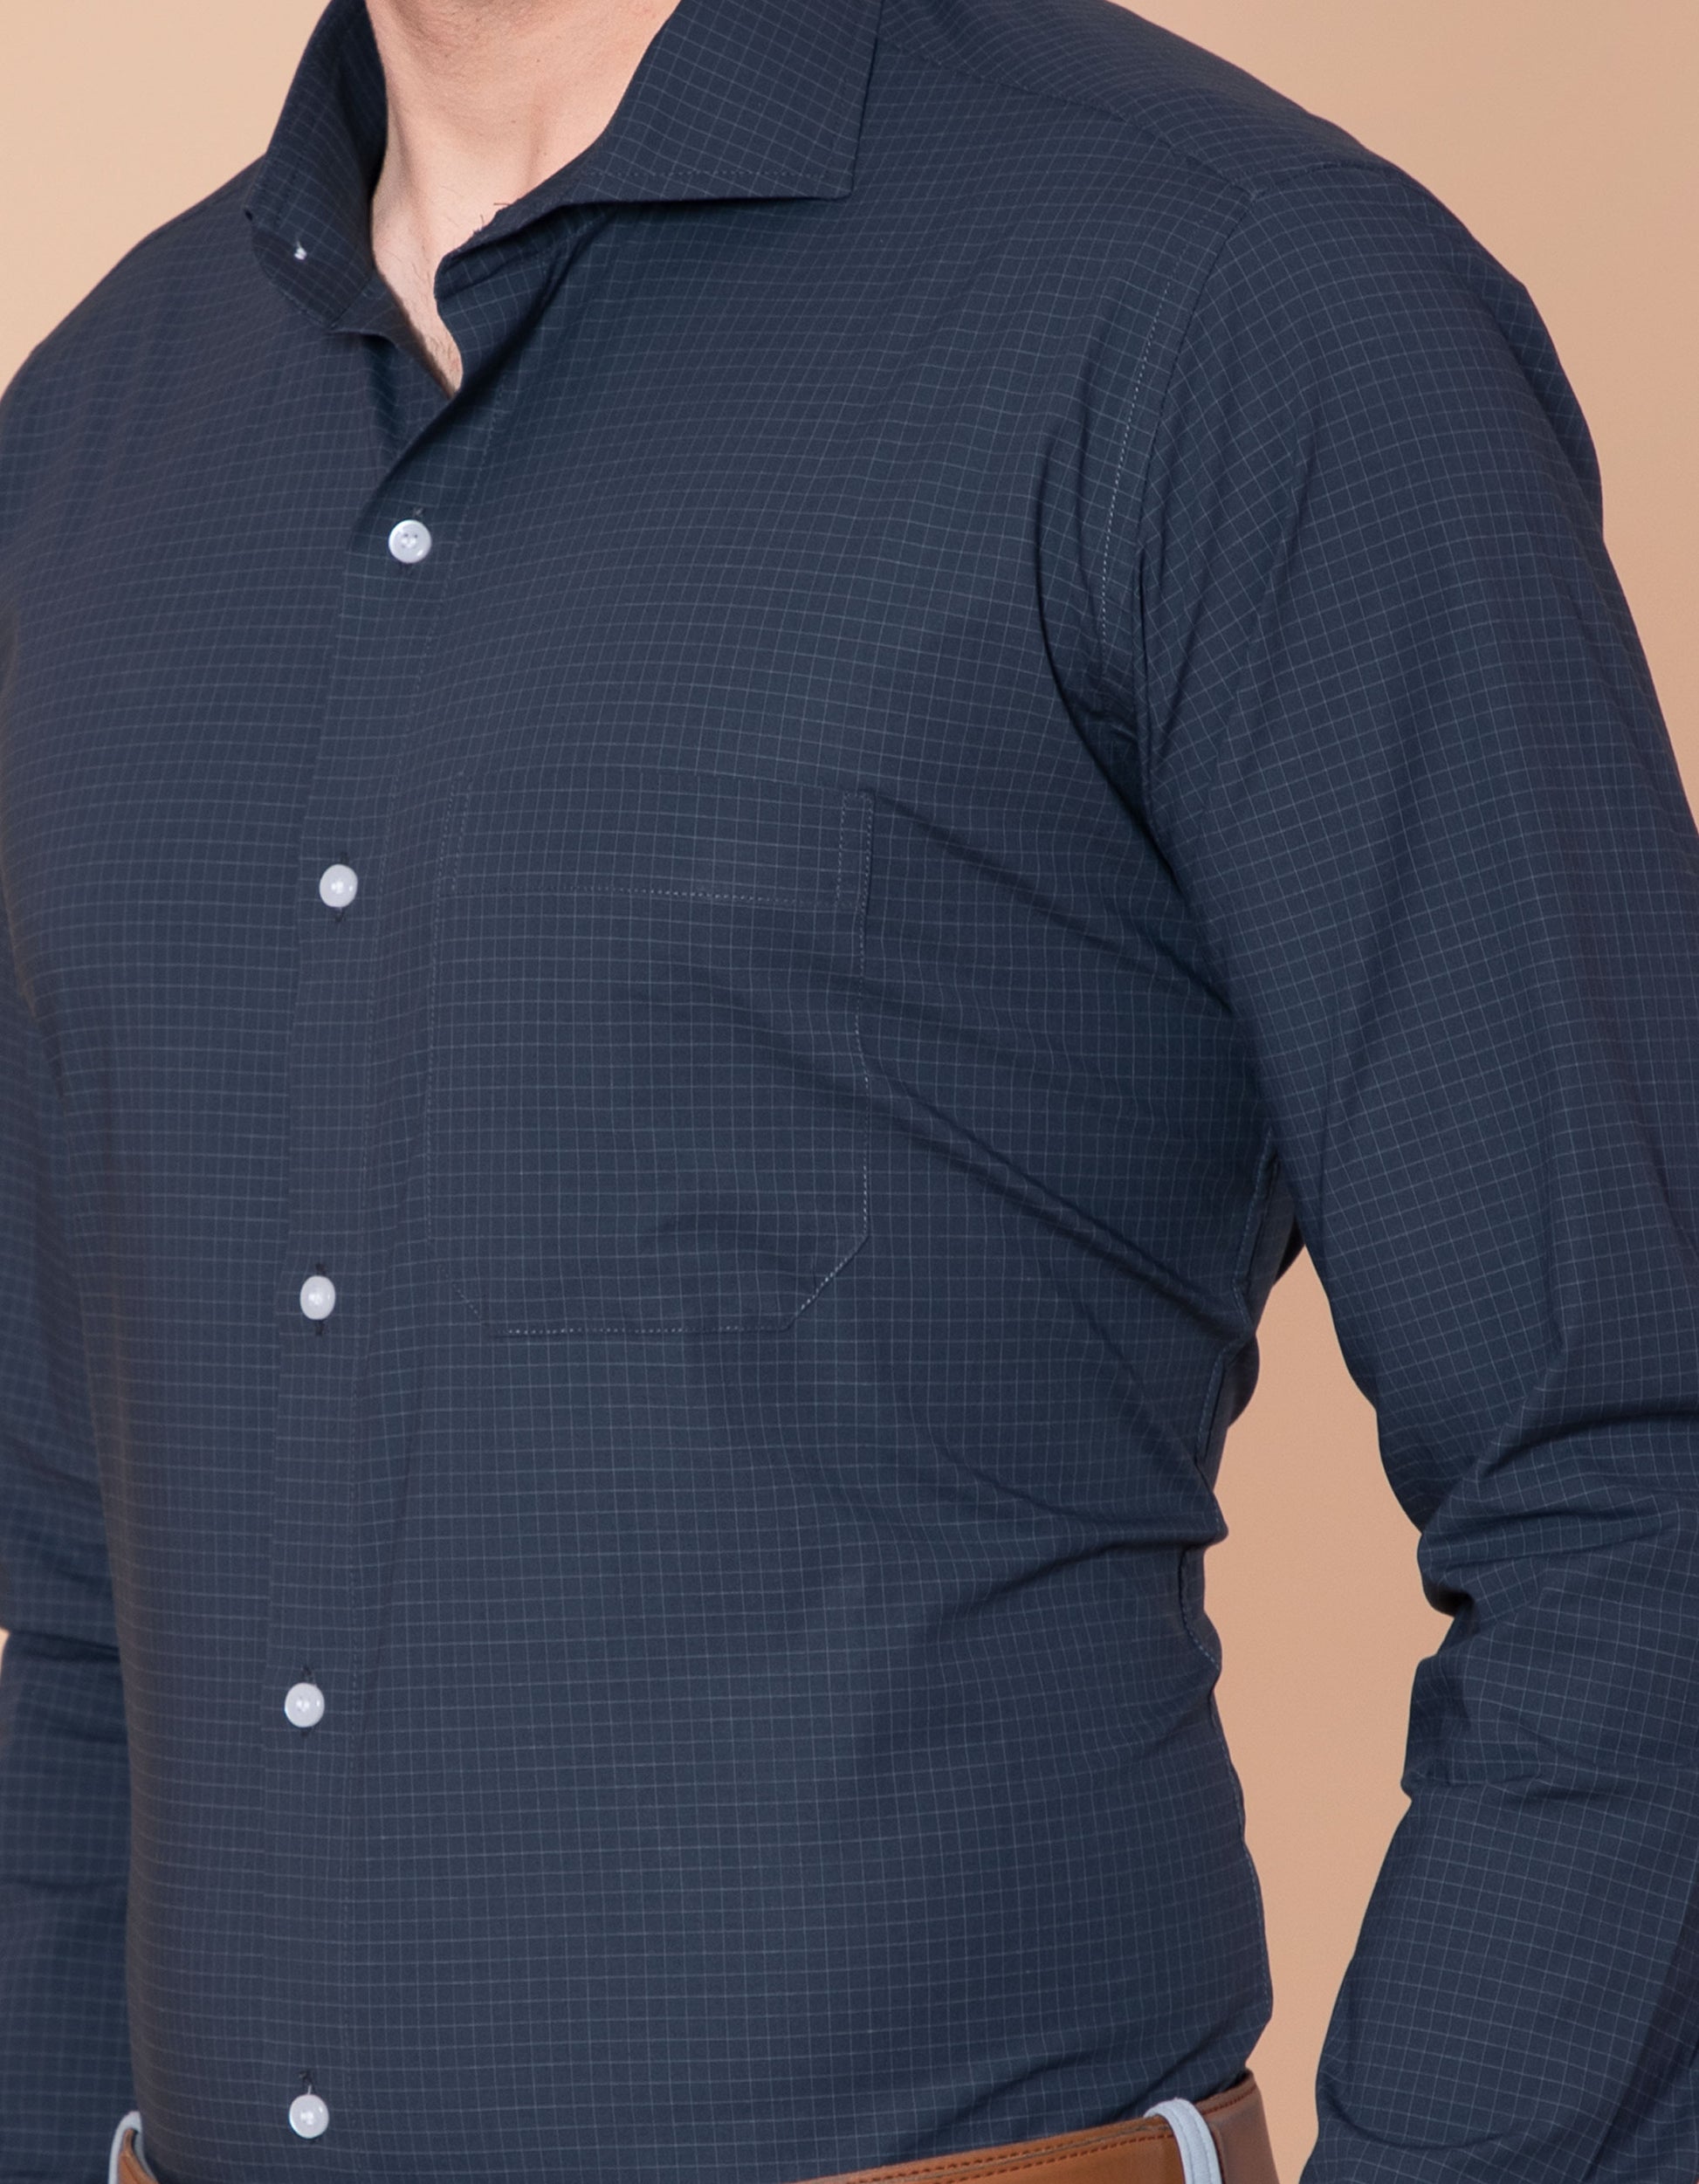 Steel grey color checks formal shirt